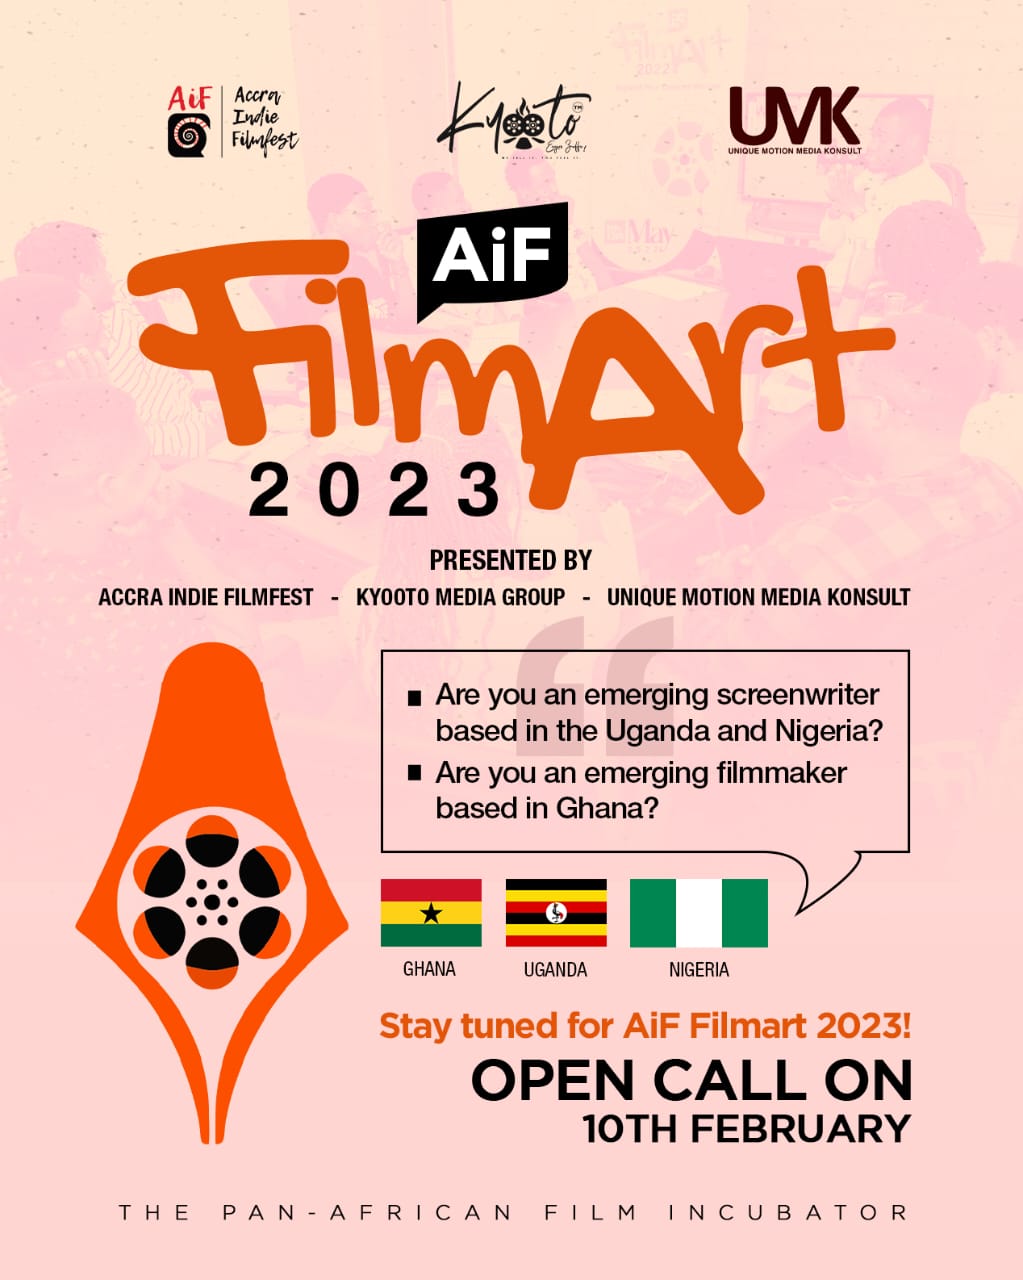 3rd edition of AiF FilmArt to be held in Ghana, Nigeria & Uganda